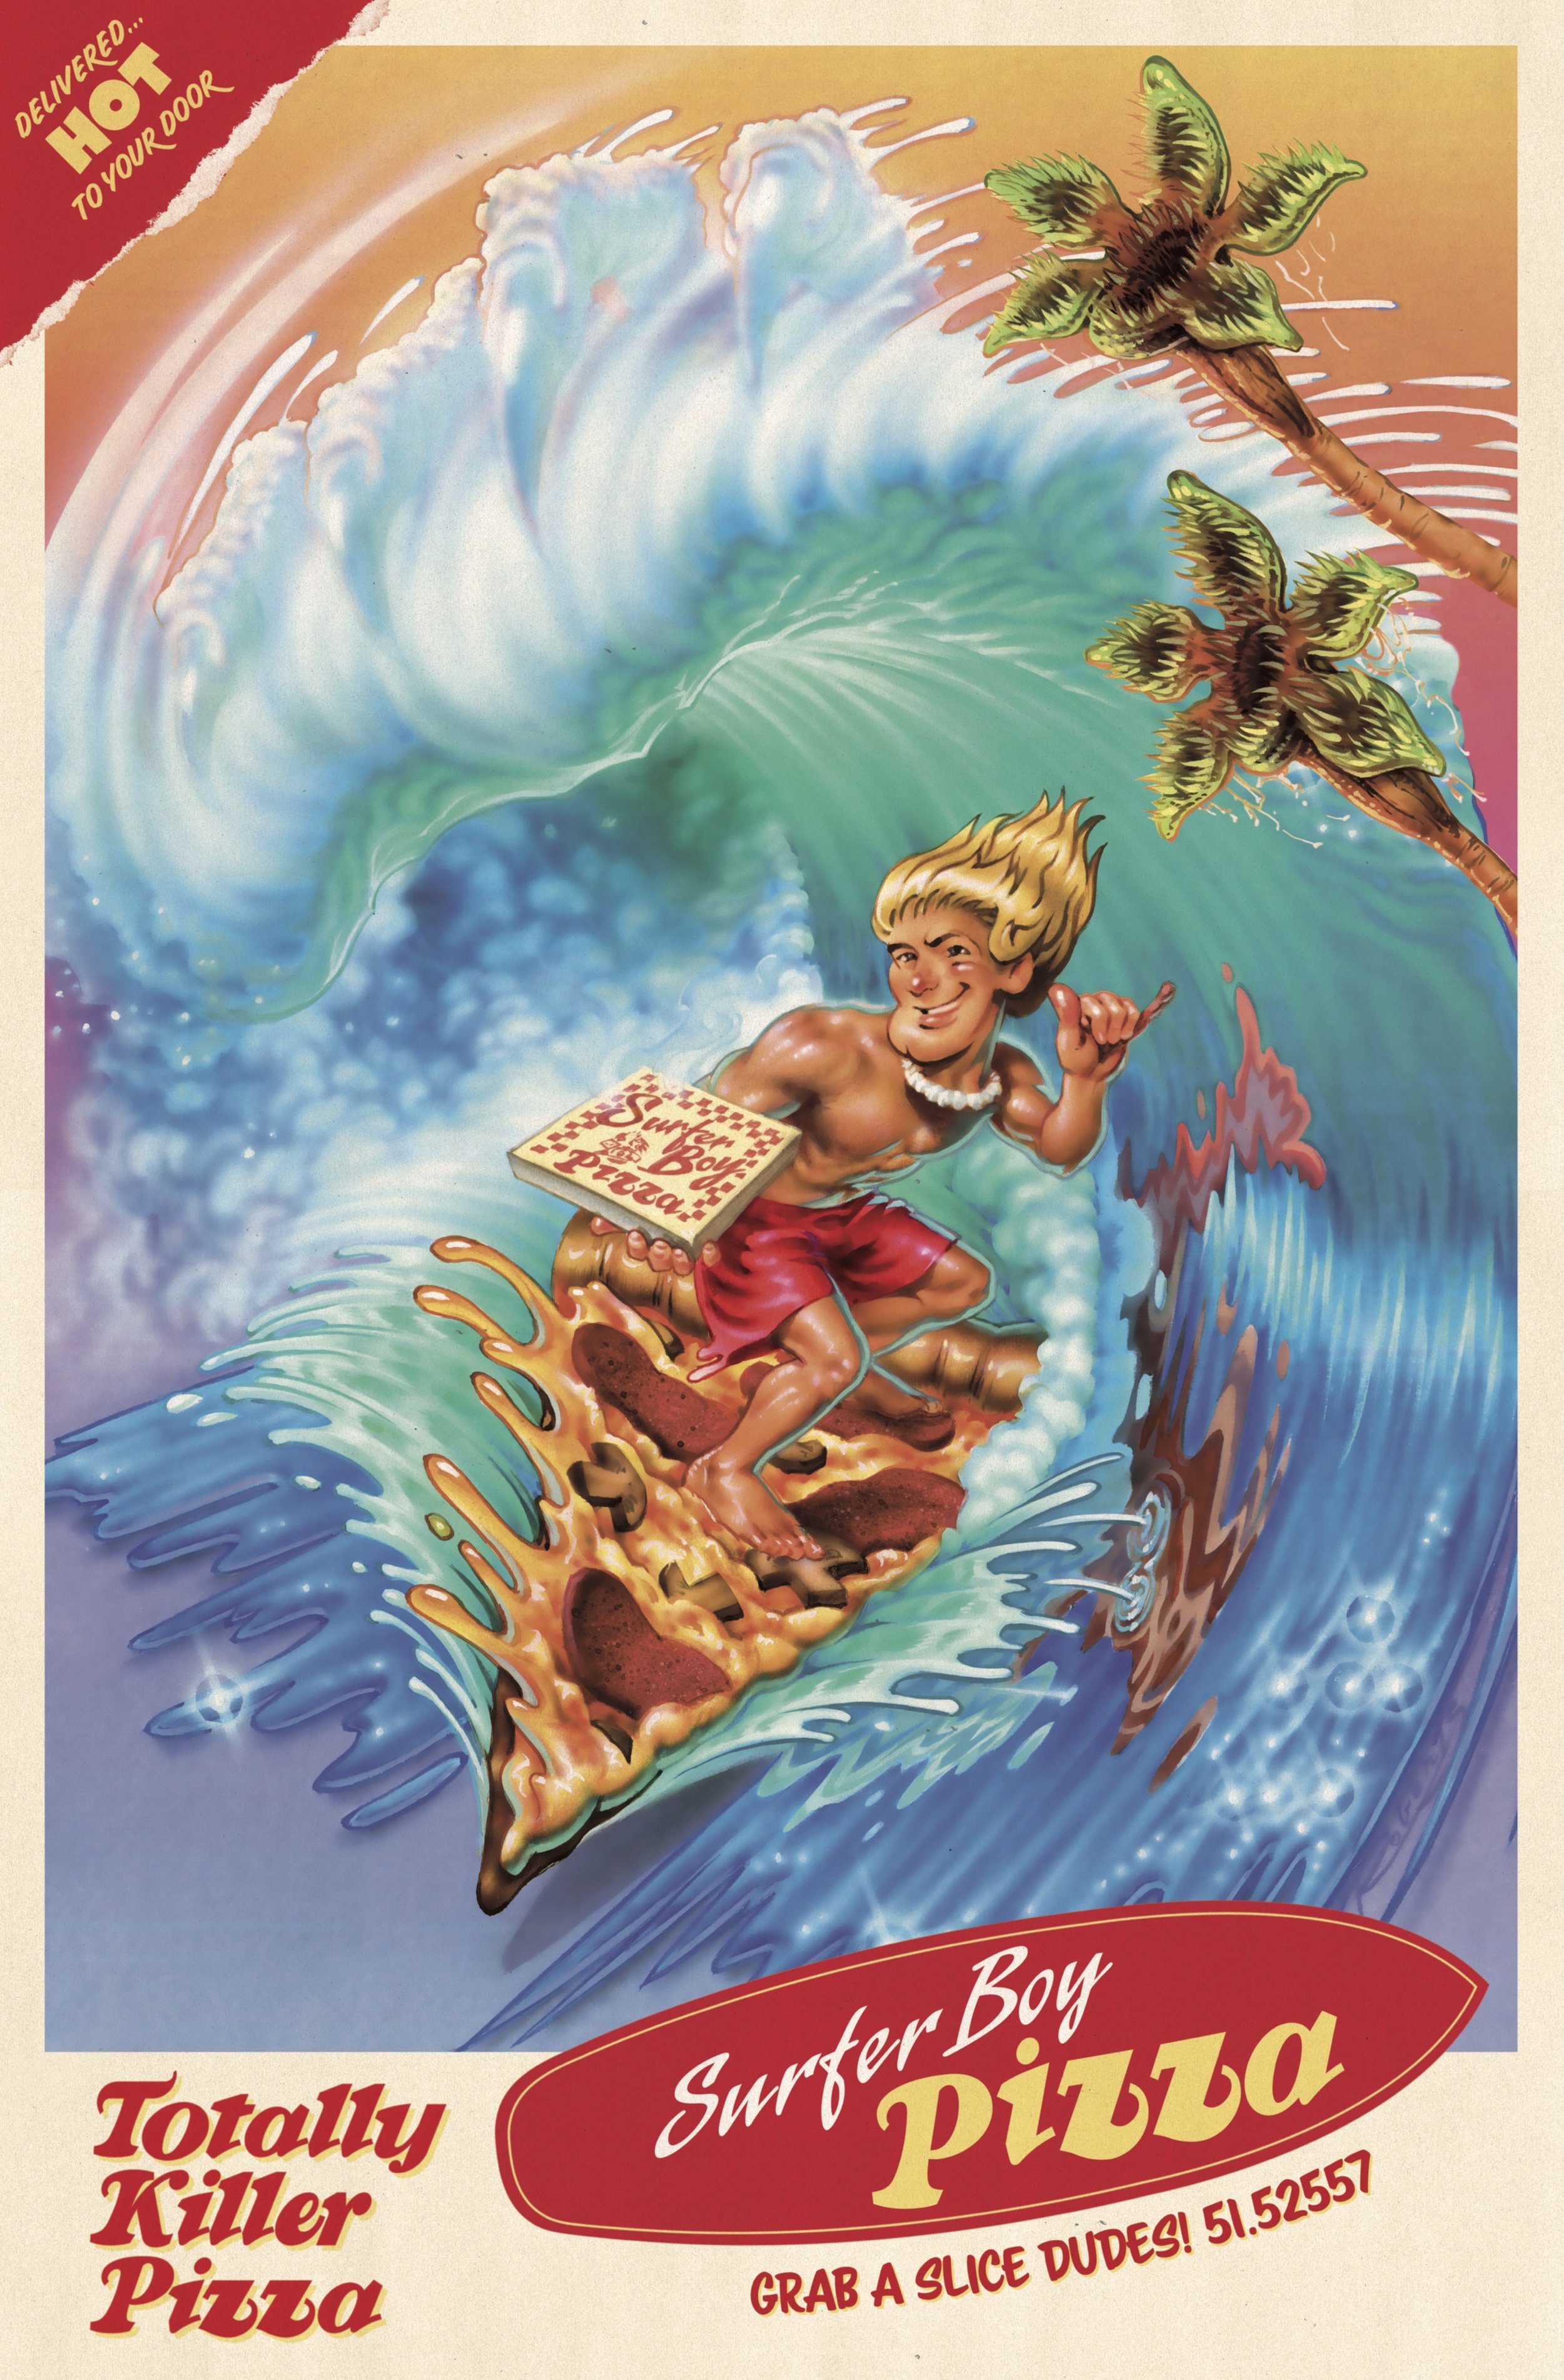 OOH Poster SurferBoy.jpg